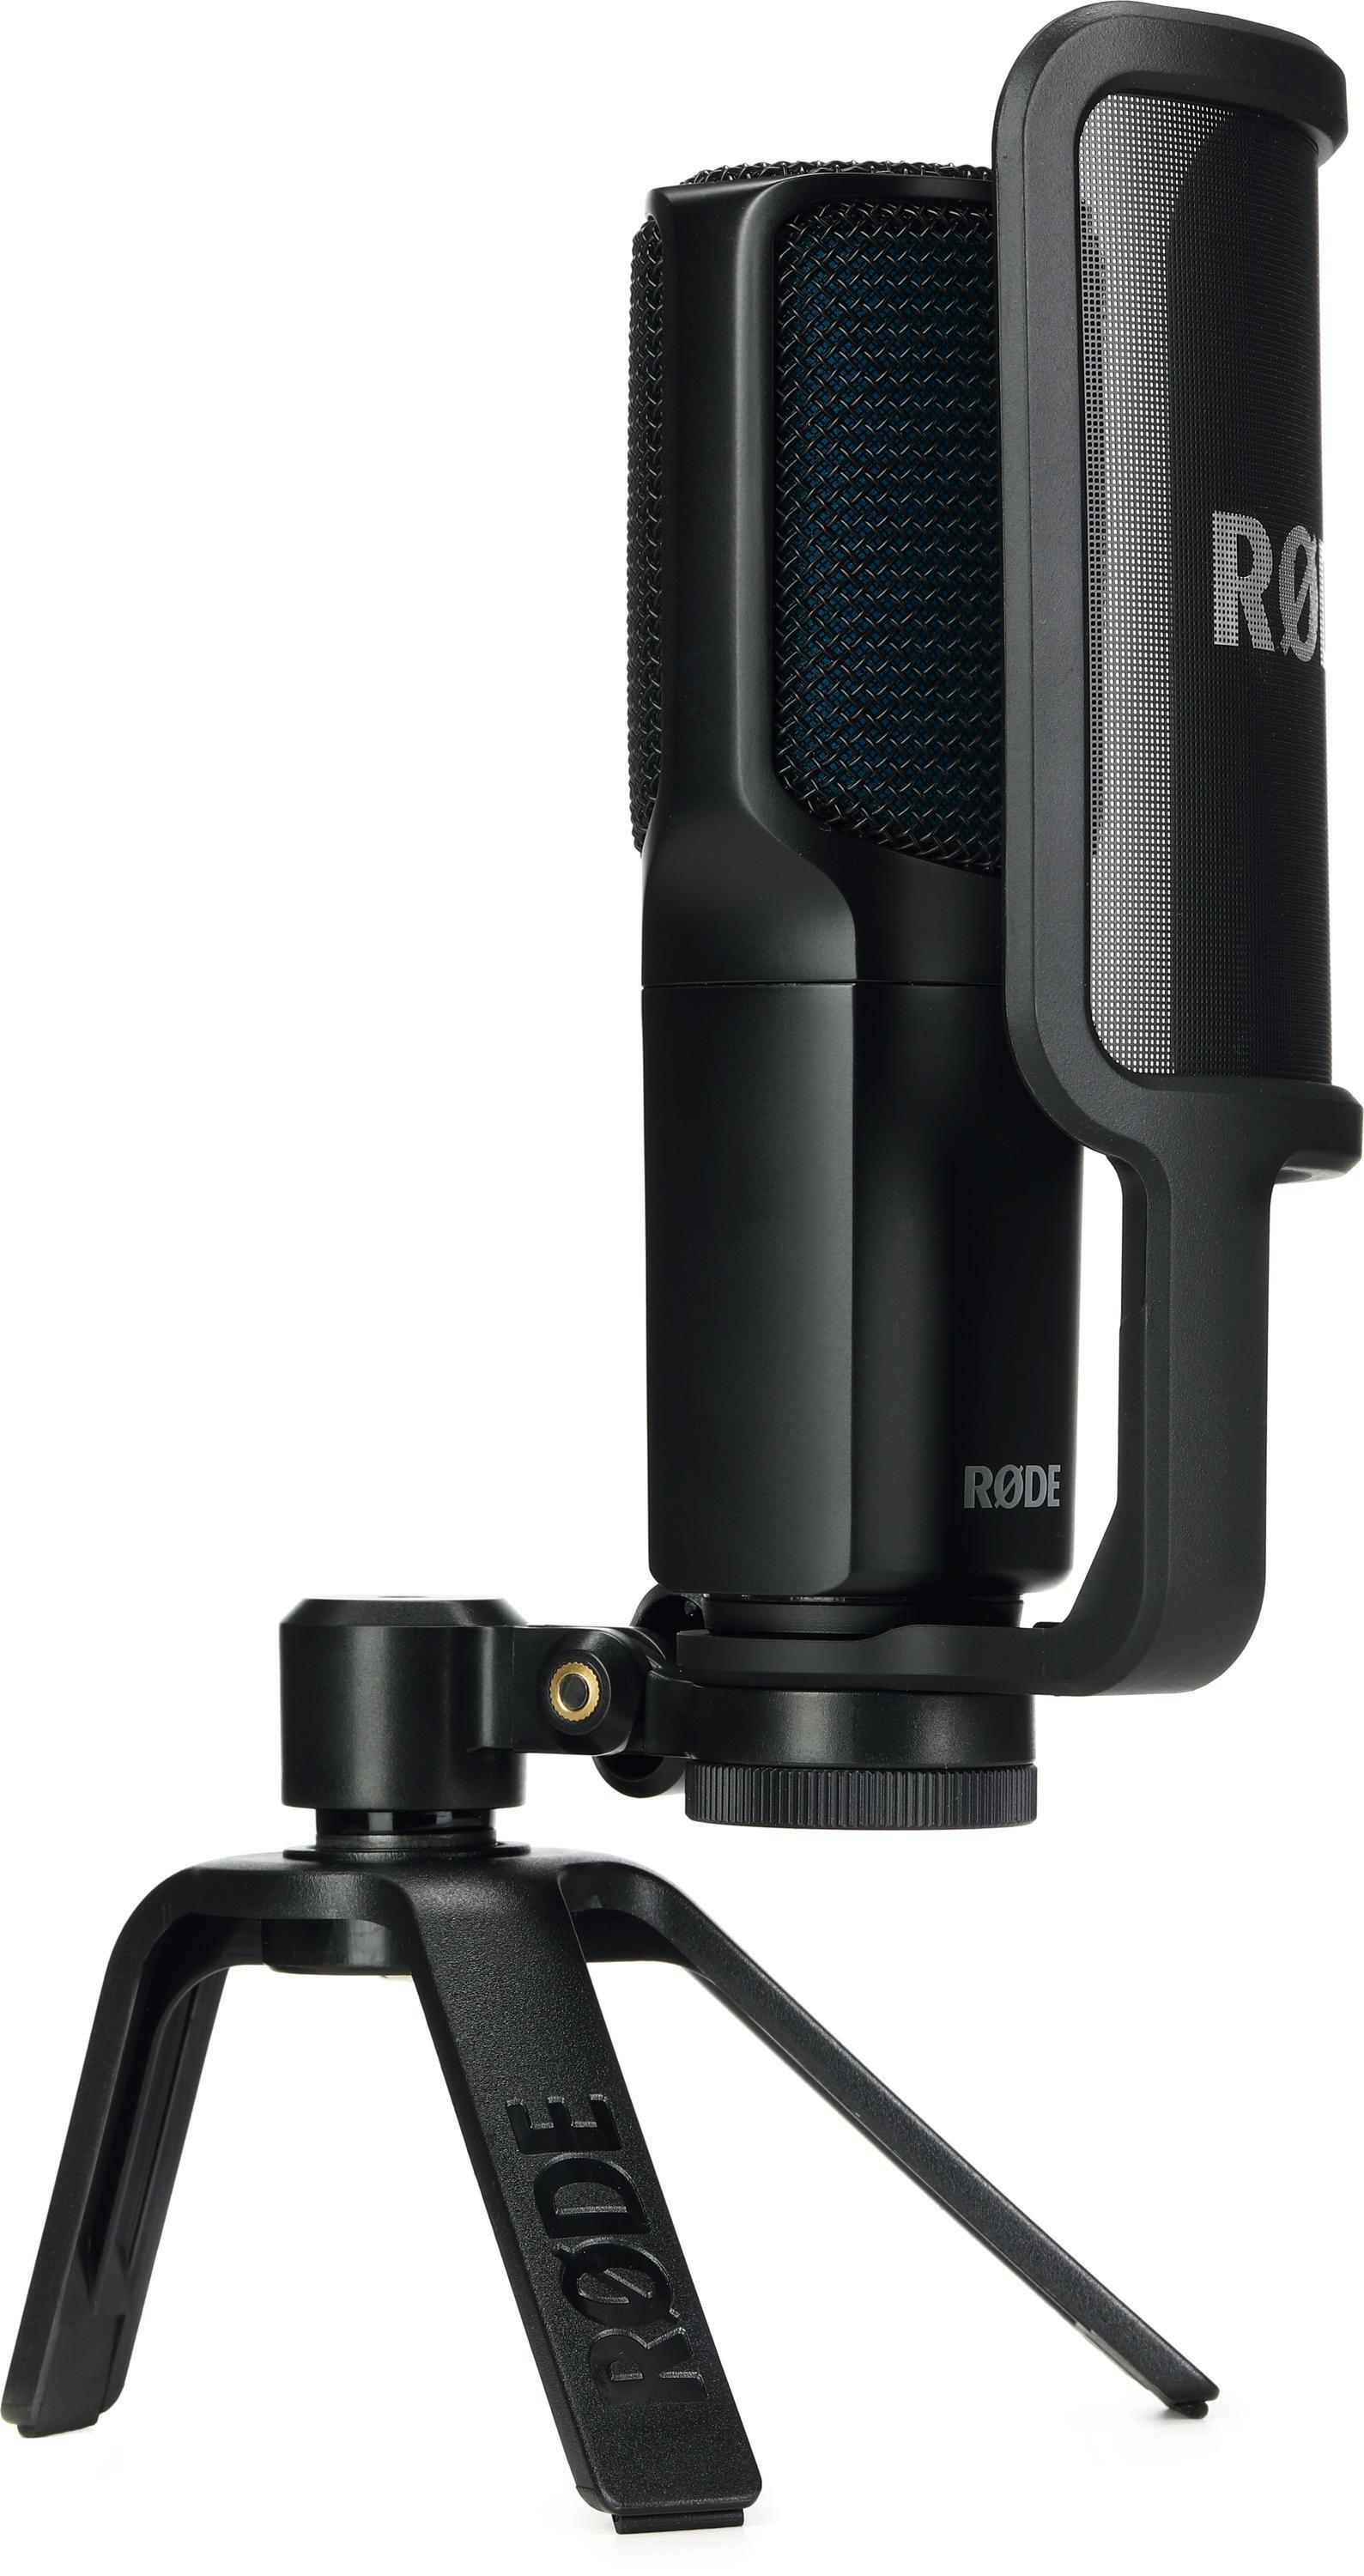 Rode NT-USB+ USB Condenser Microphone w/ Rode PSA1 Boom Arm